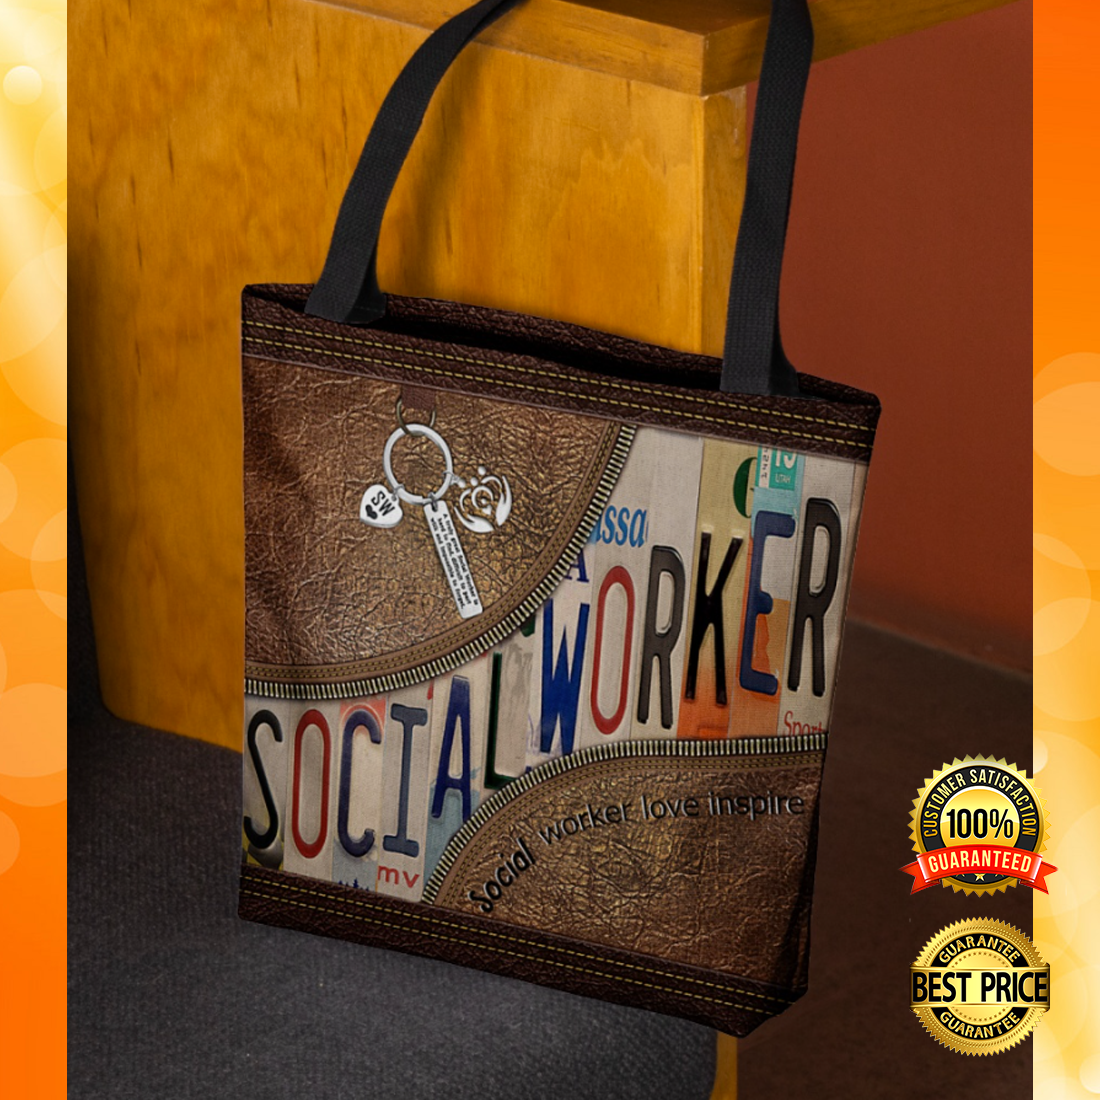 Social Worker Love Inspire Tote Bag 4